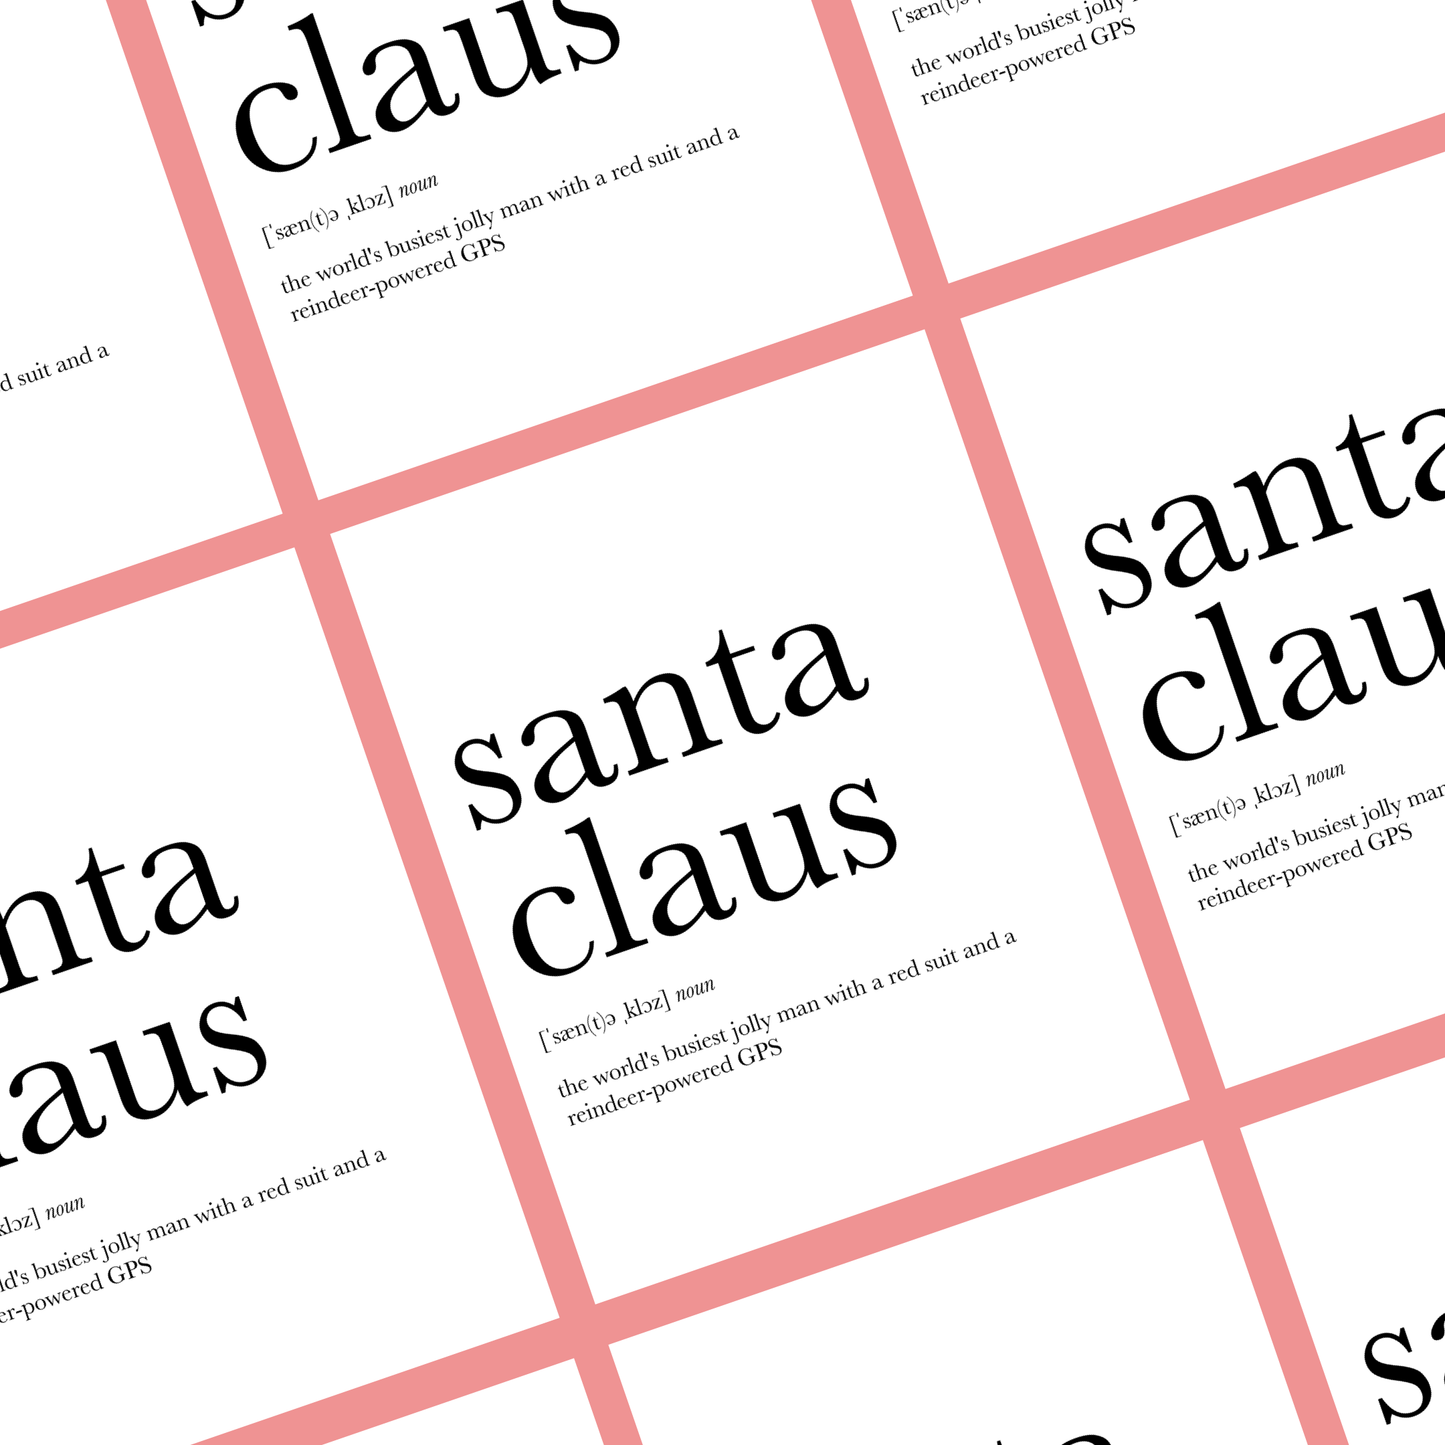 Santa Claus Definition Christmas Greeting Card | Footnotes Paper